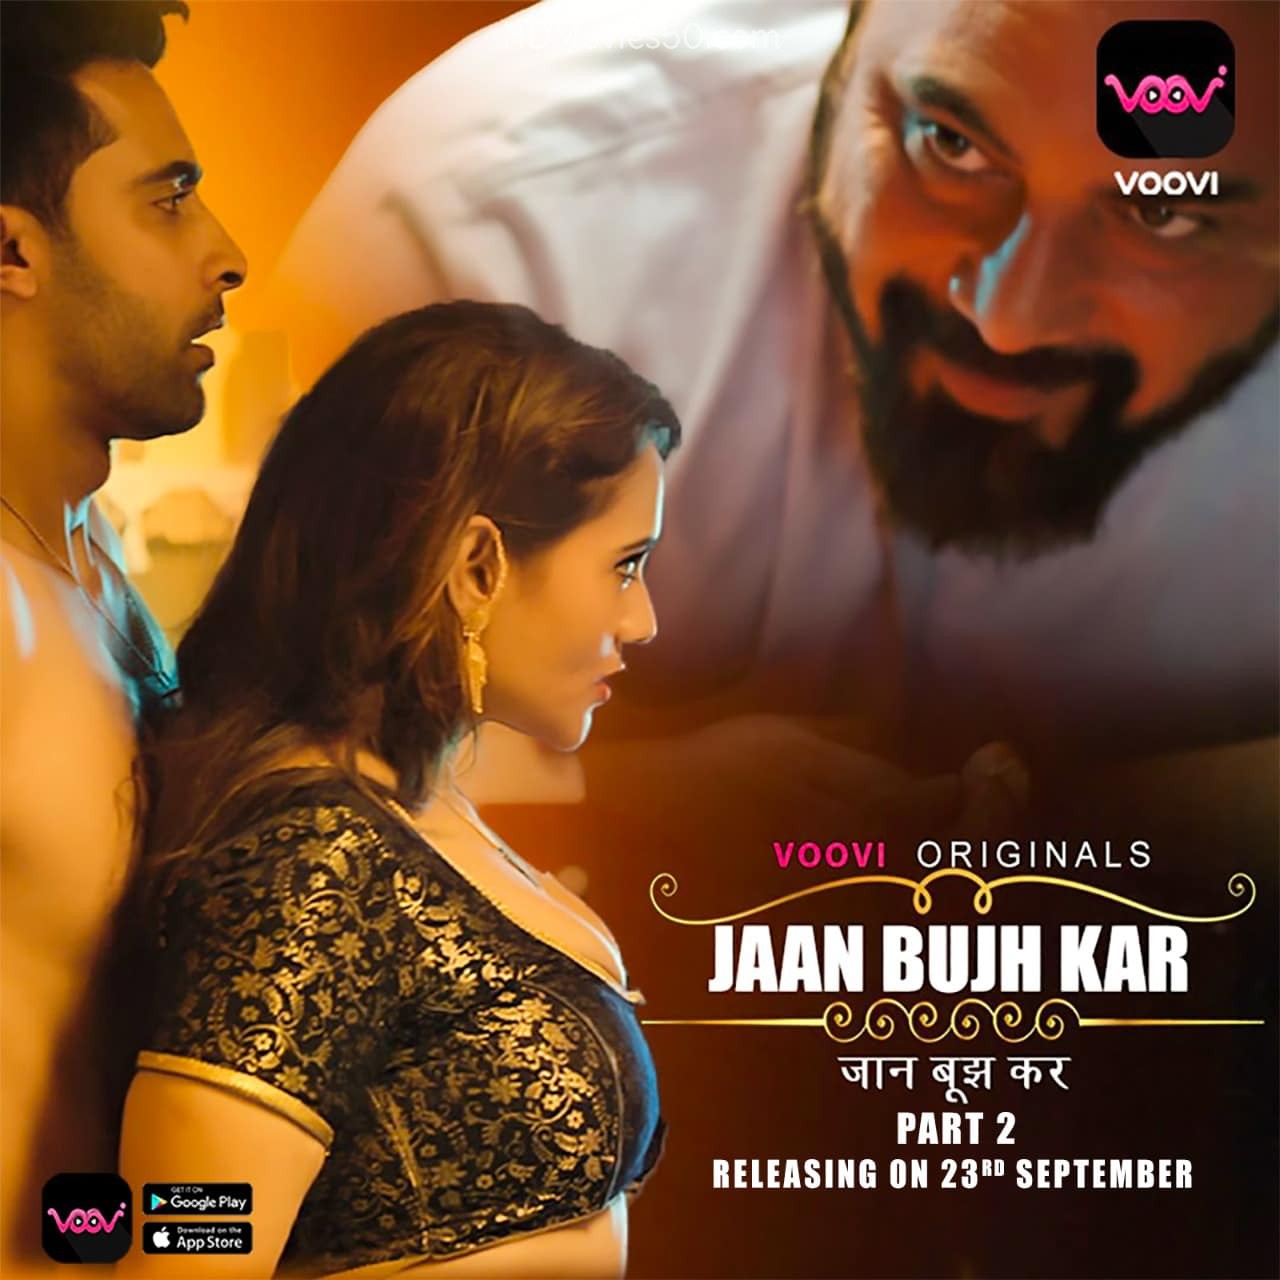 18+ Jaan Bujh Kar 2022 S02 Part 2 EP03-04 Hindi Voovi Original Web Series 720p HDRip 300MB Download